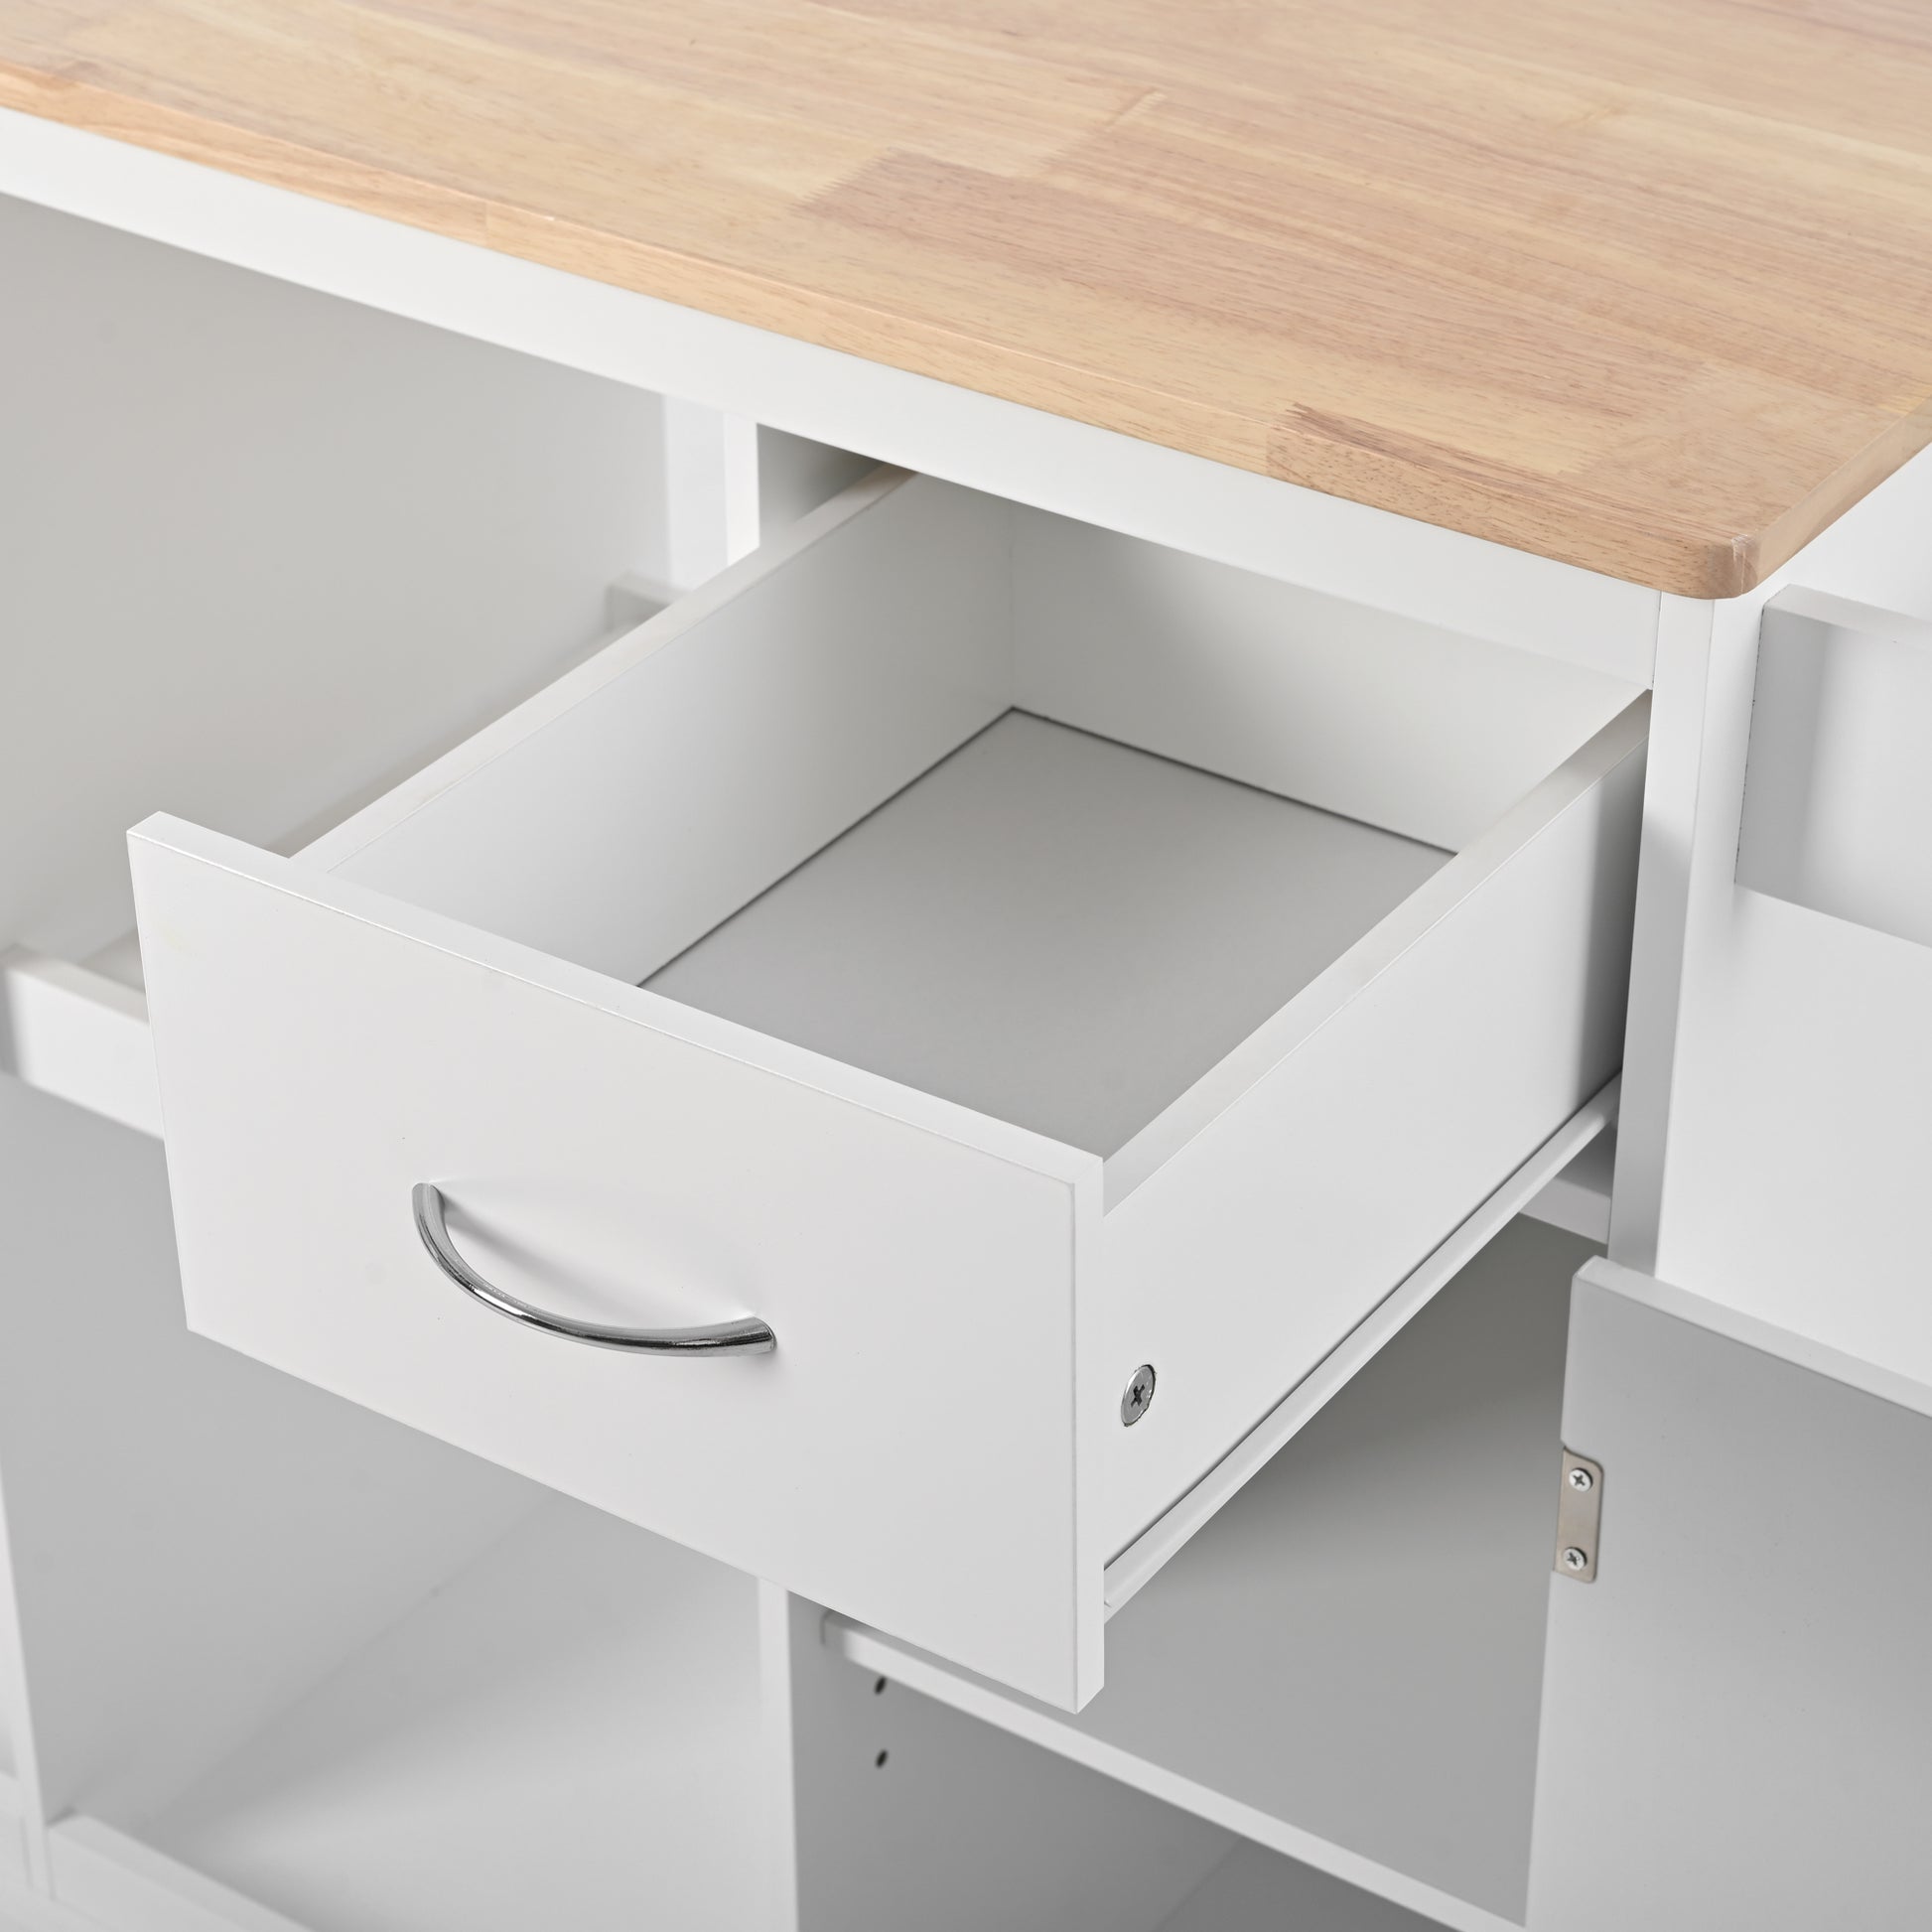 Multipurpose Kitchen Cart Cabinet with Side Storage white-mdf